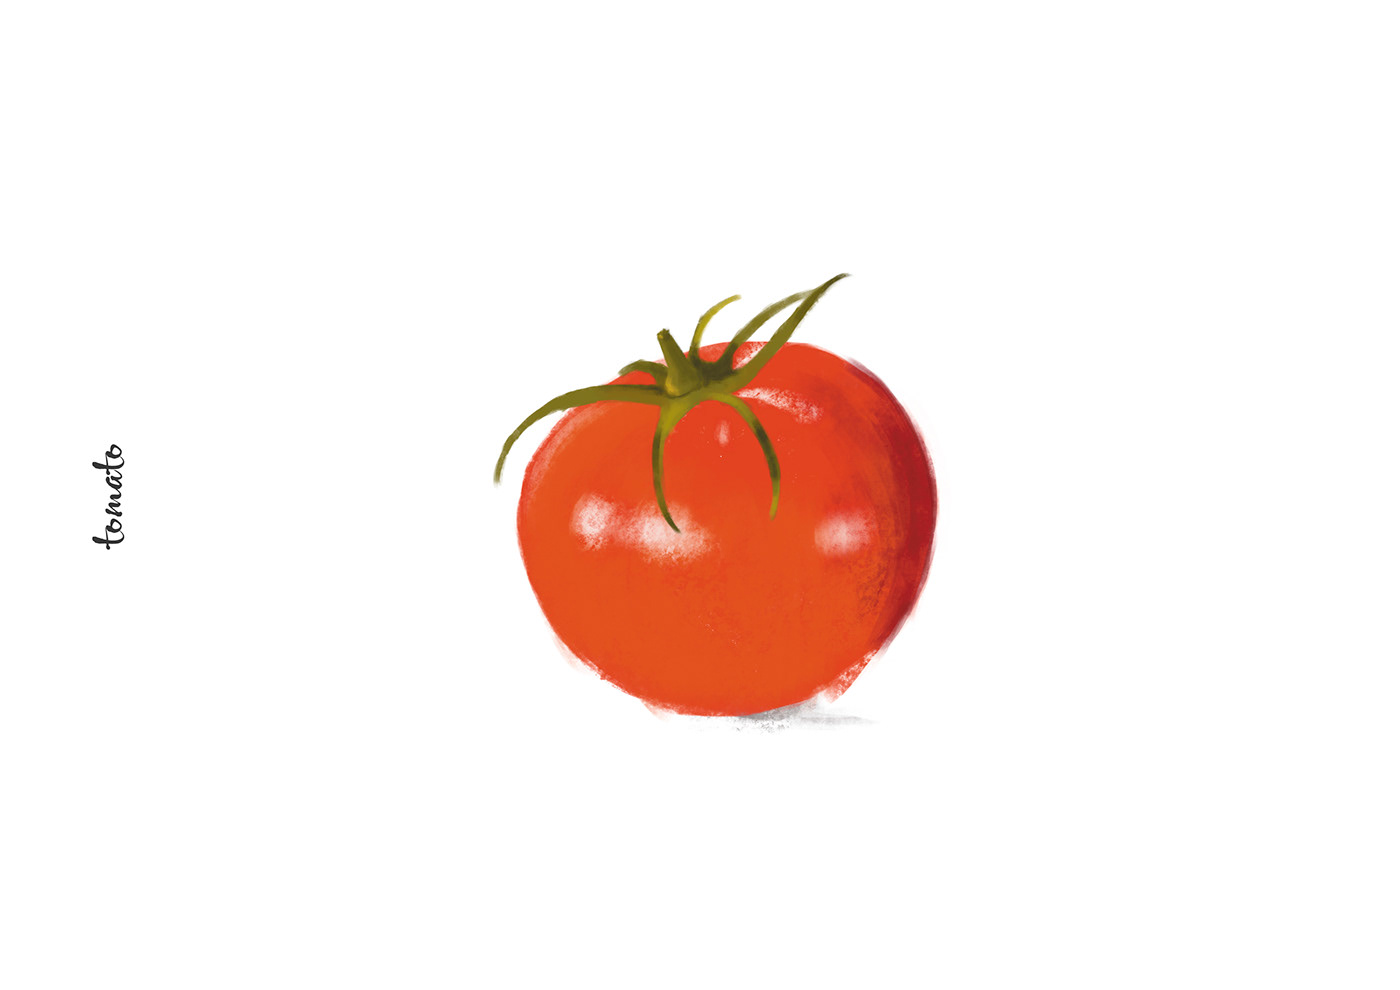 Image may contain: fruit, orange and plum tomato